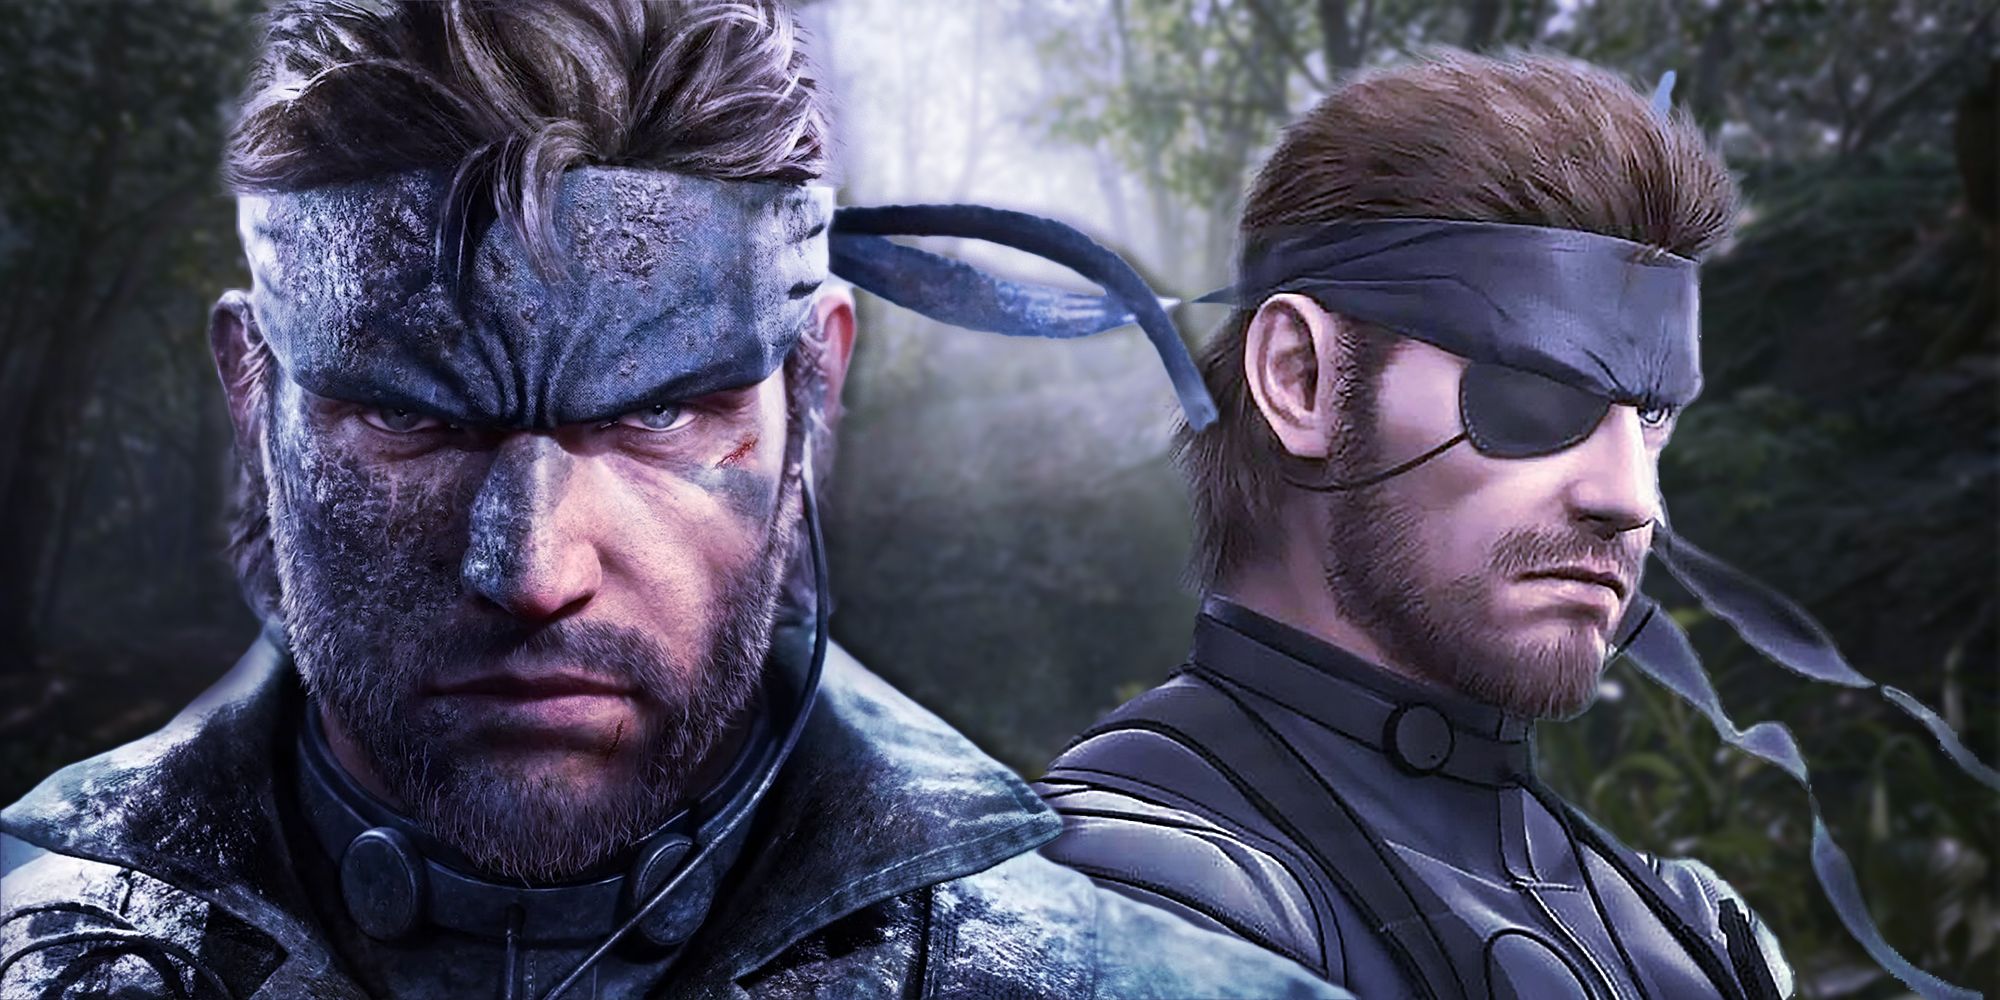 Snake from the Metal Gear Solid Delta: Snake Eater reveal trailer alongside Snake from the original Snake Eater game in a jungle environment